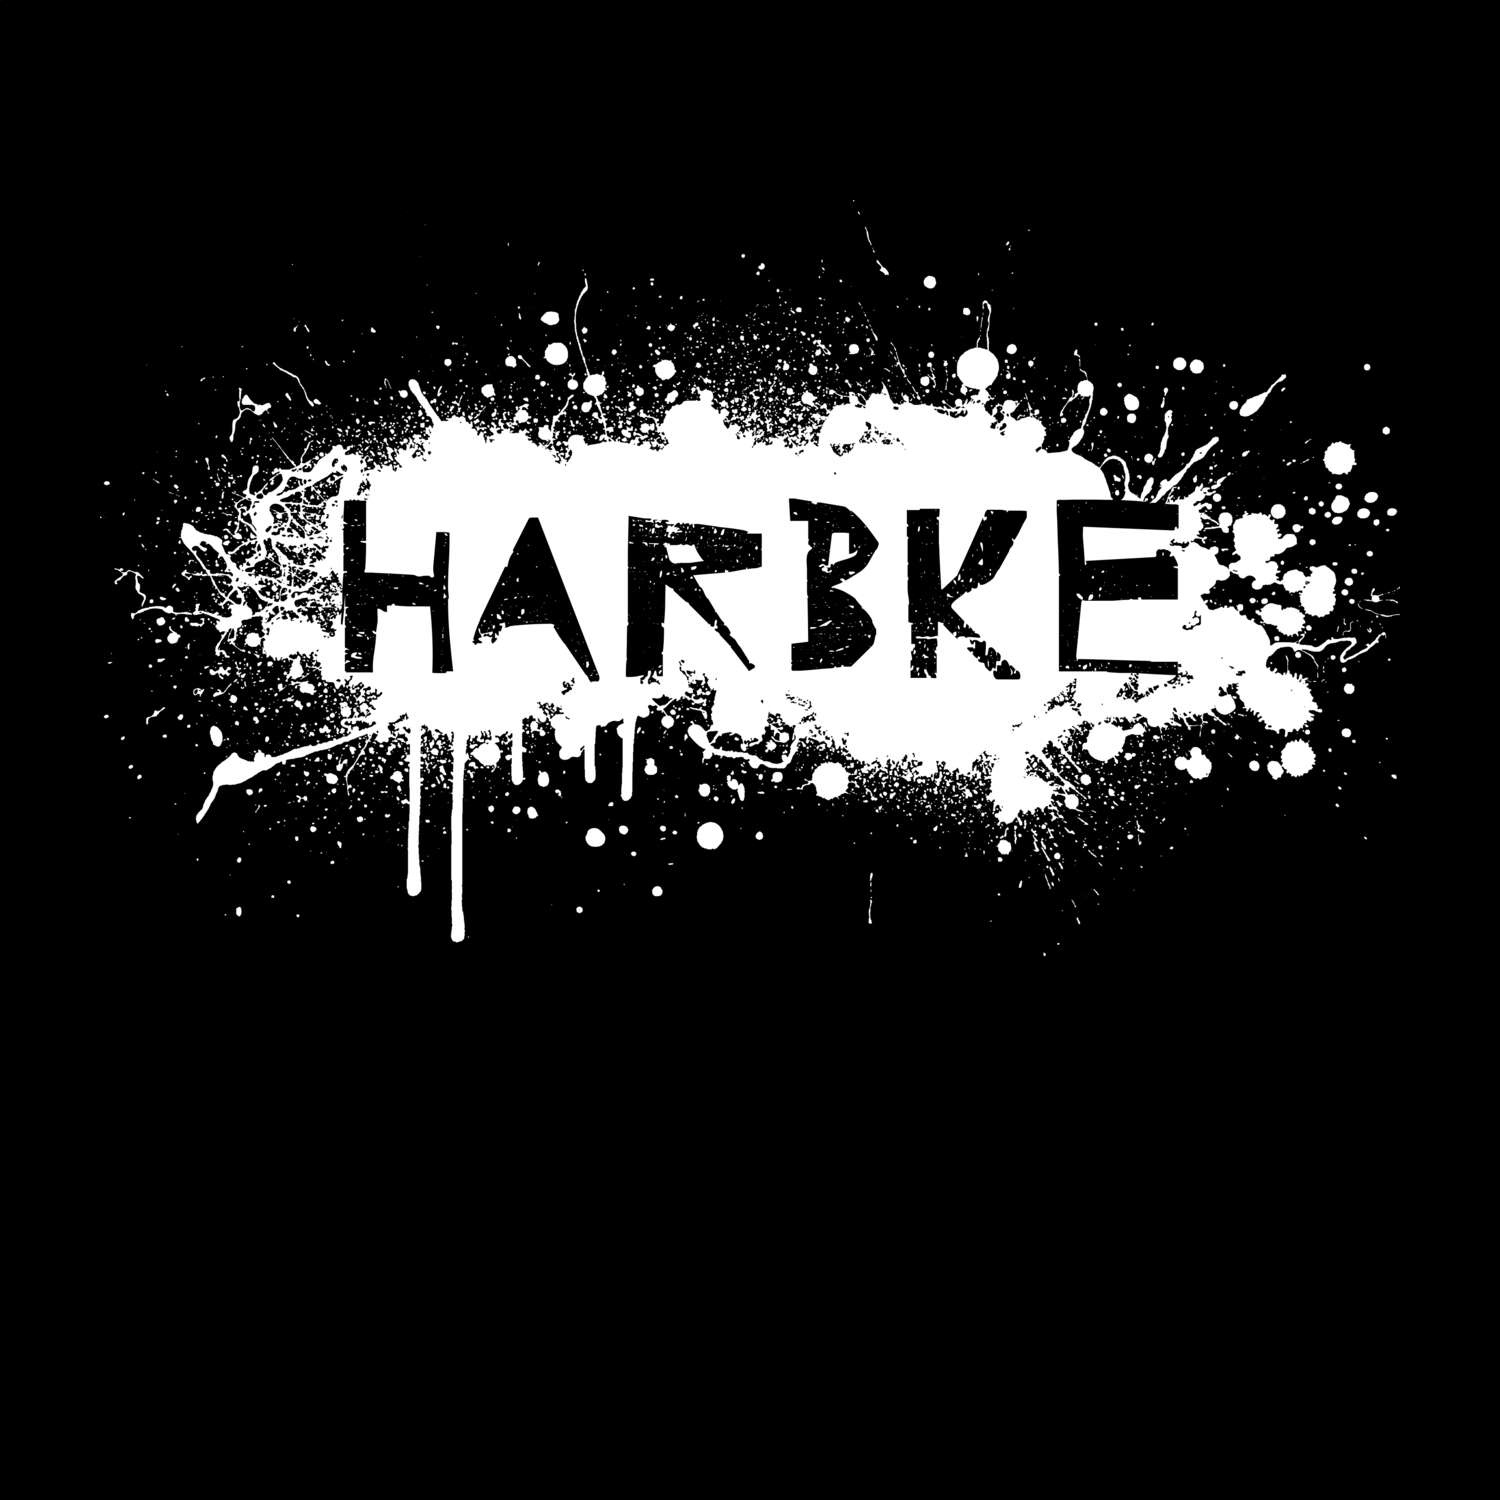 Harbke T-Shirt »Paint Splash Punk«